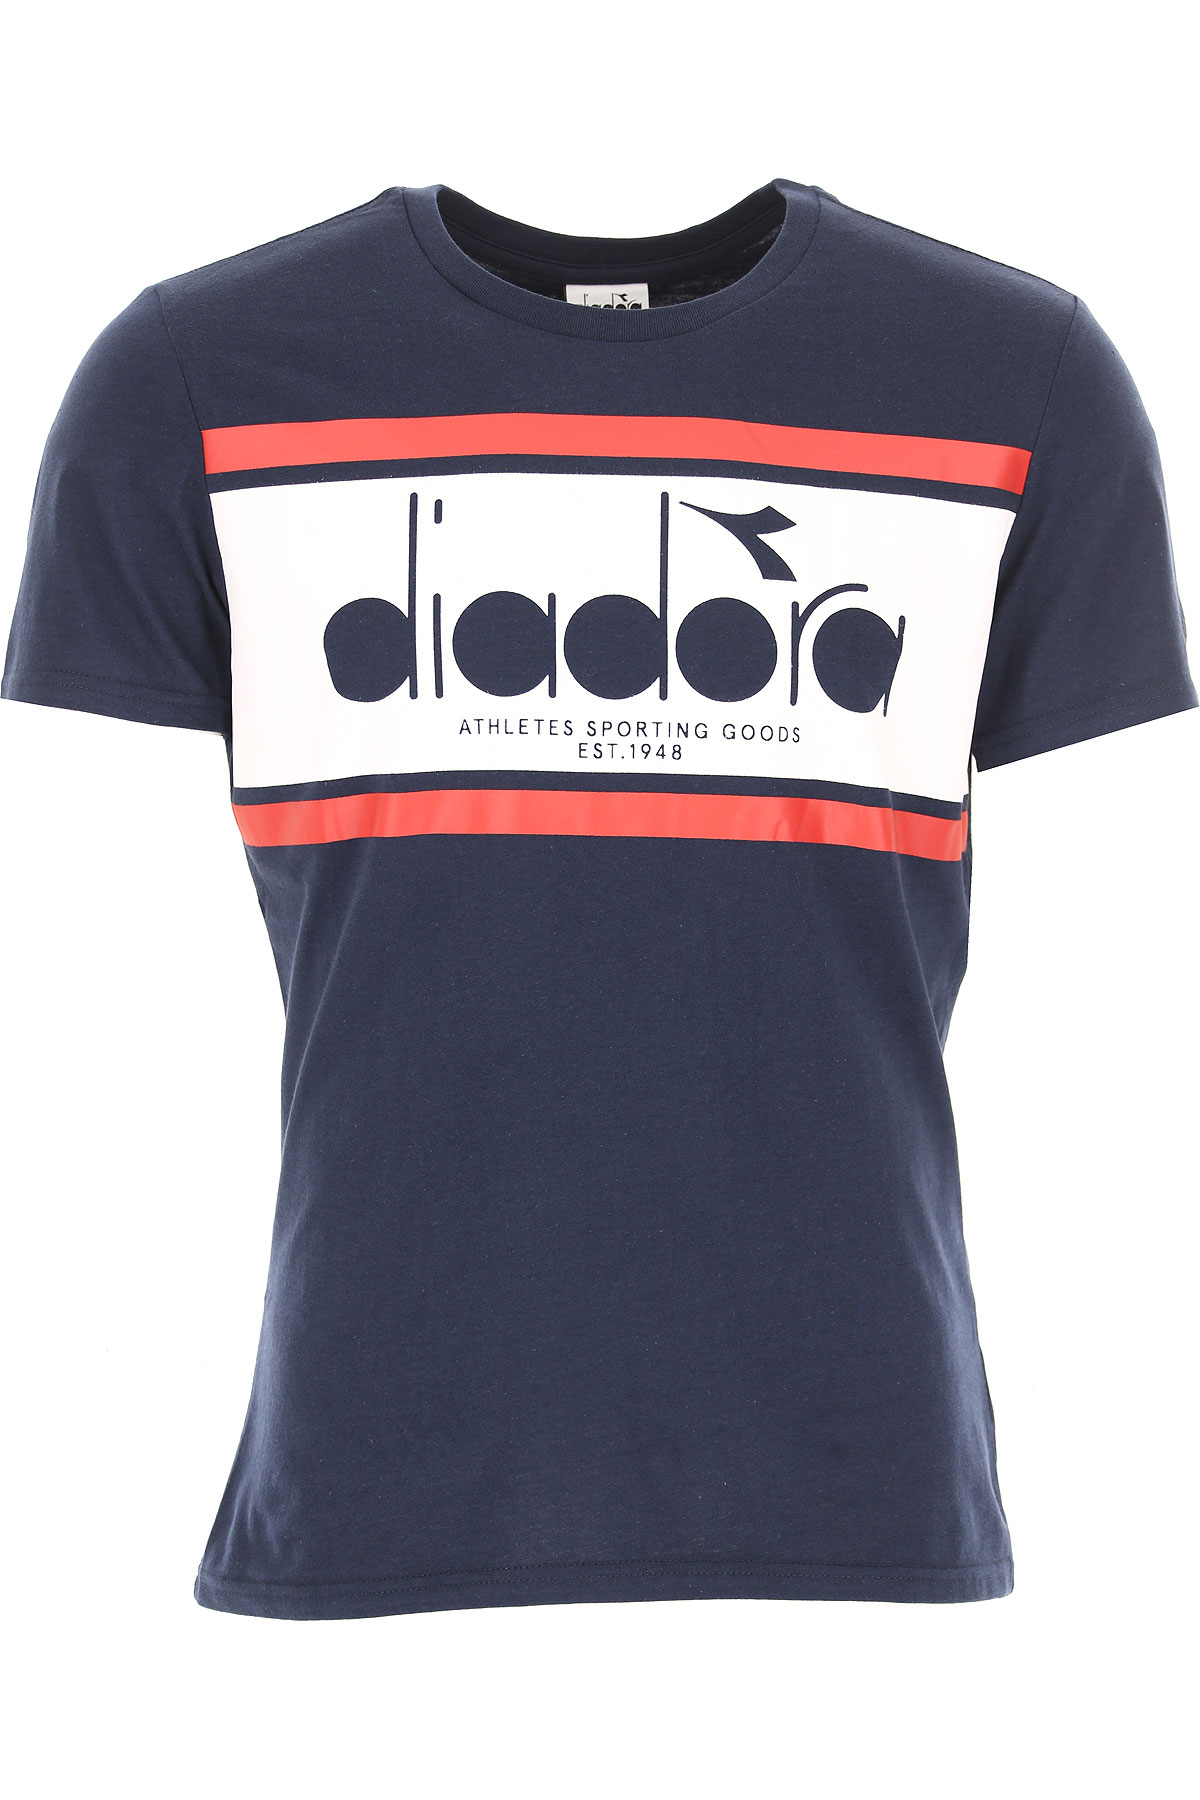 Diadora T-shirt Homme, Bleu, Coton, 2017, L S XL